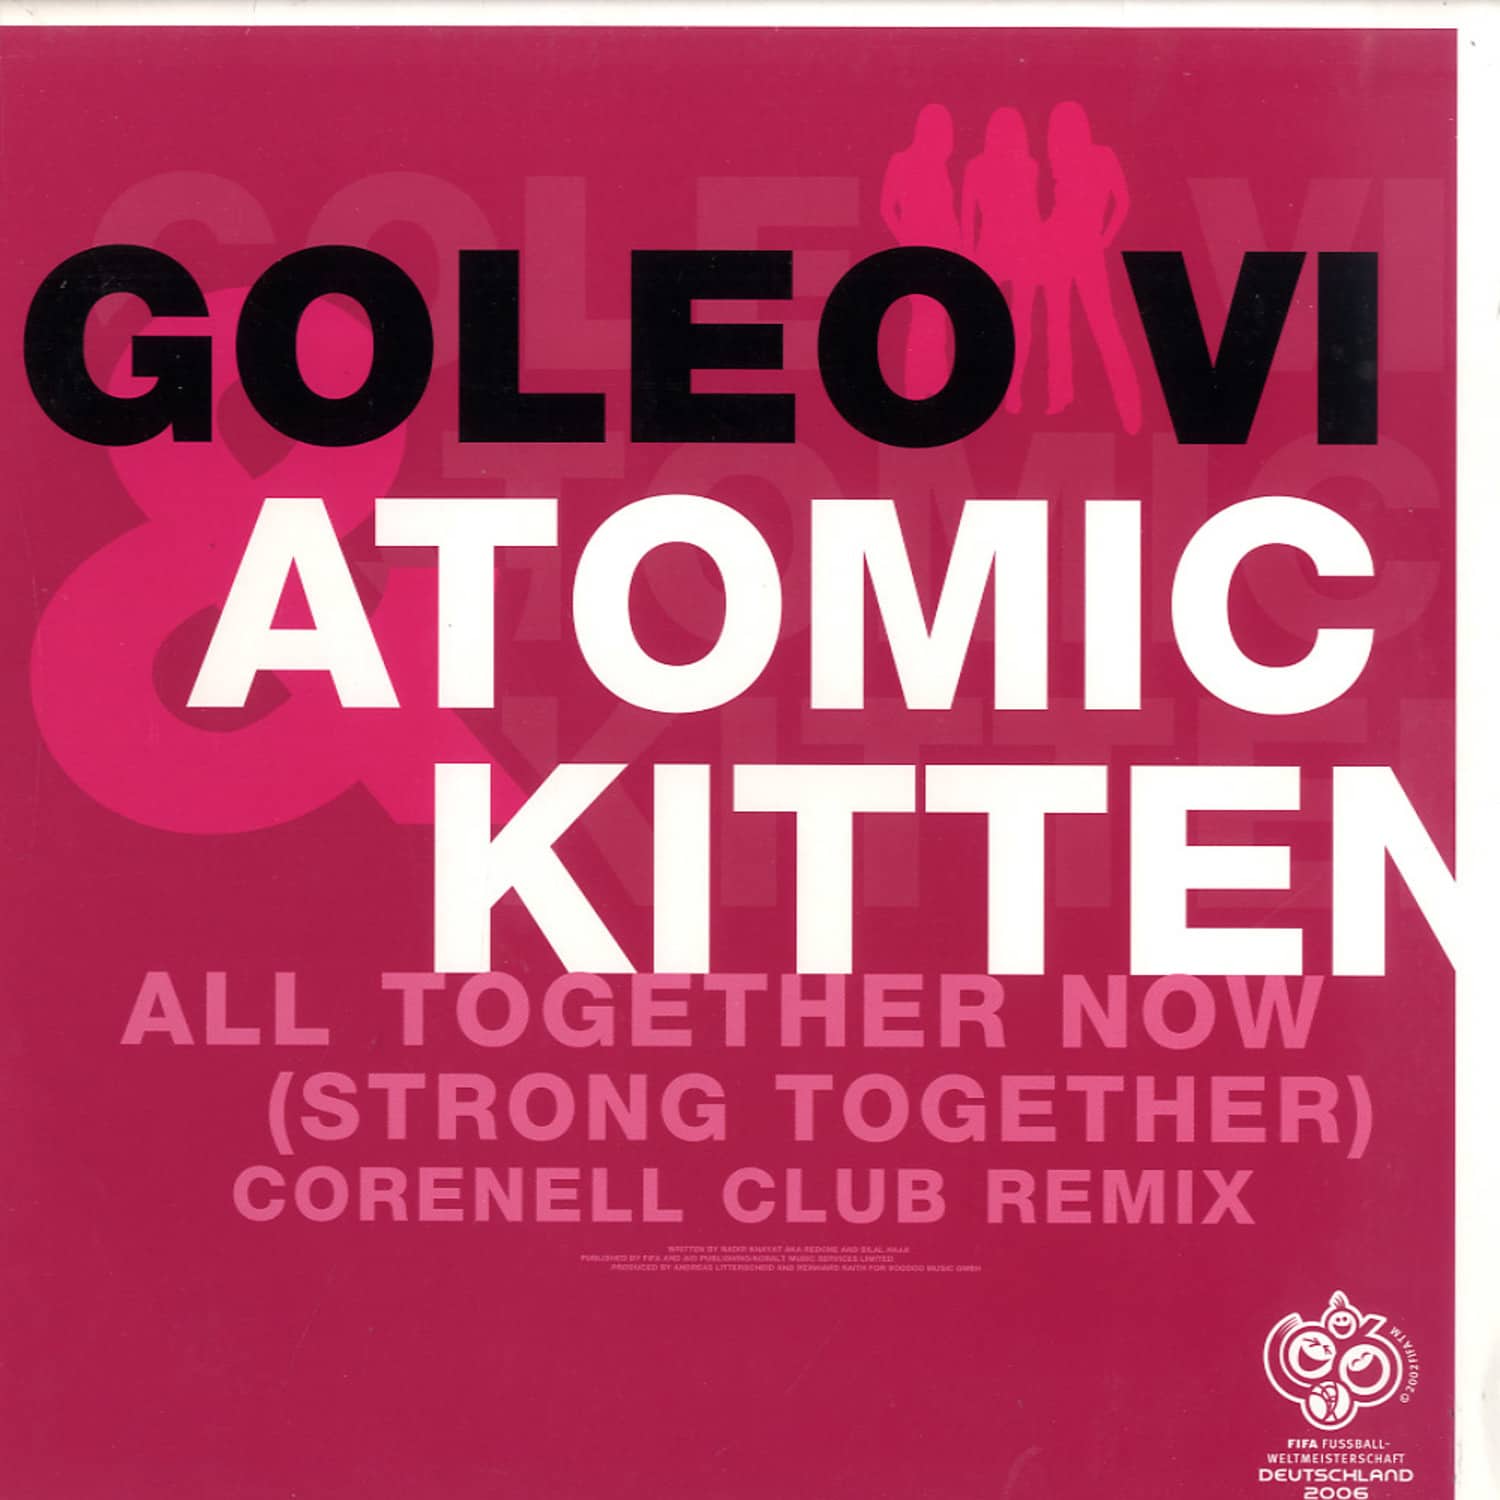 Goleo VI vs Atomic Kitten - ALL TOGETHER NOW